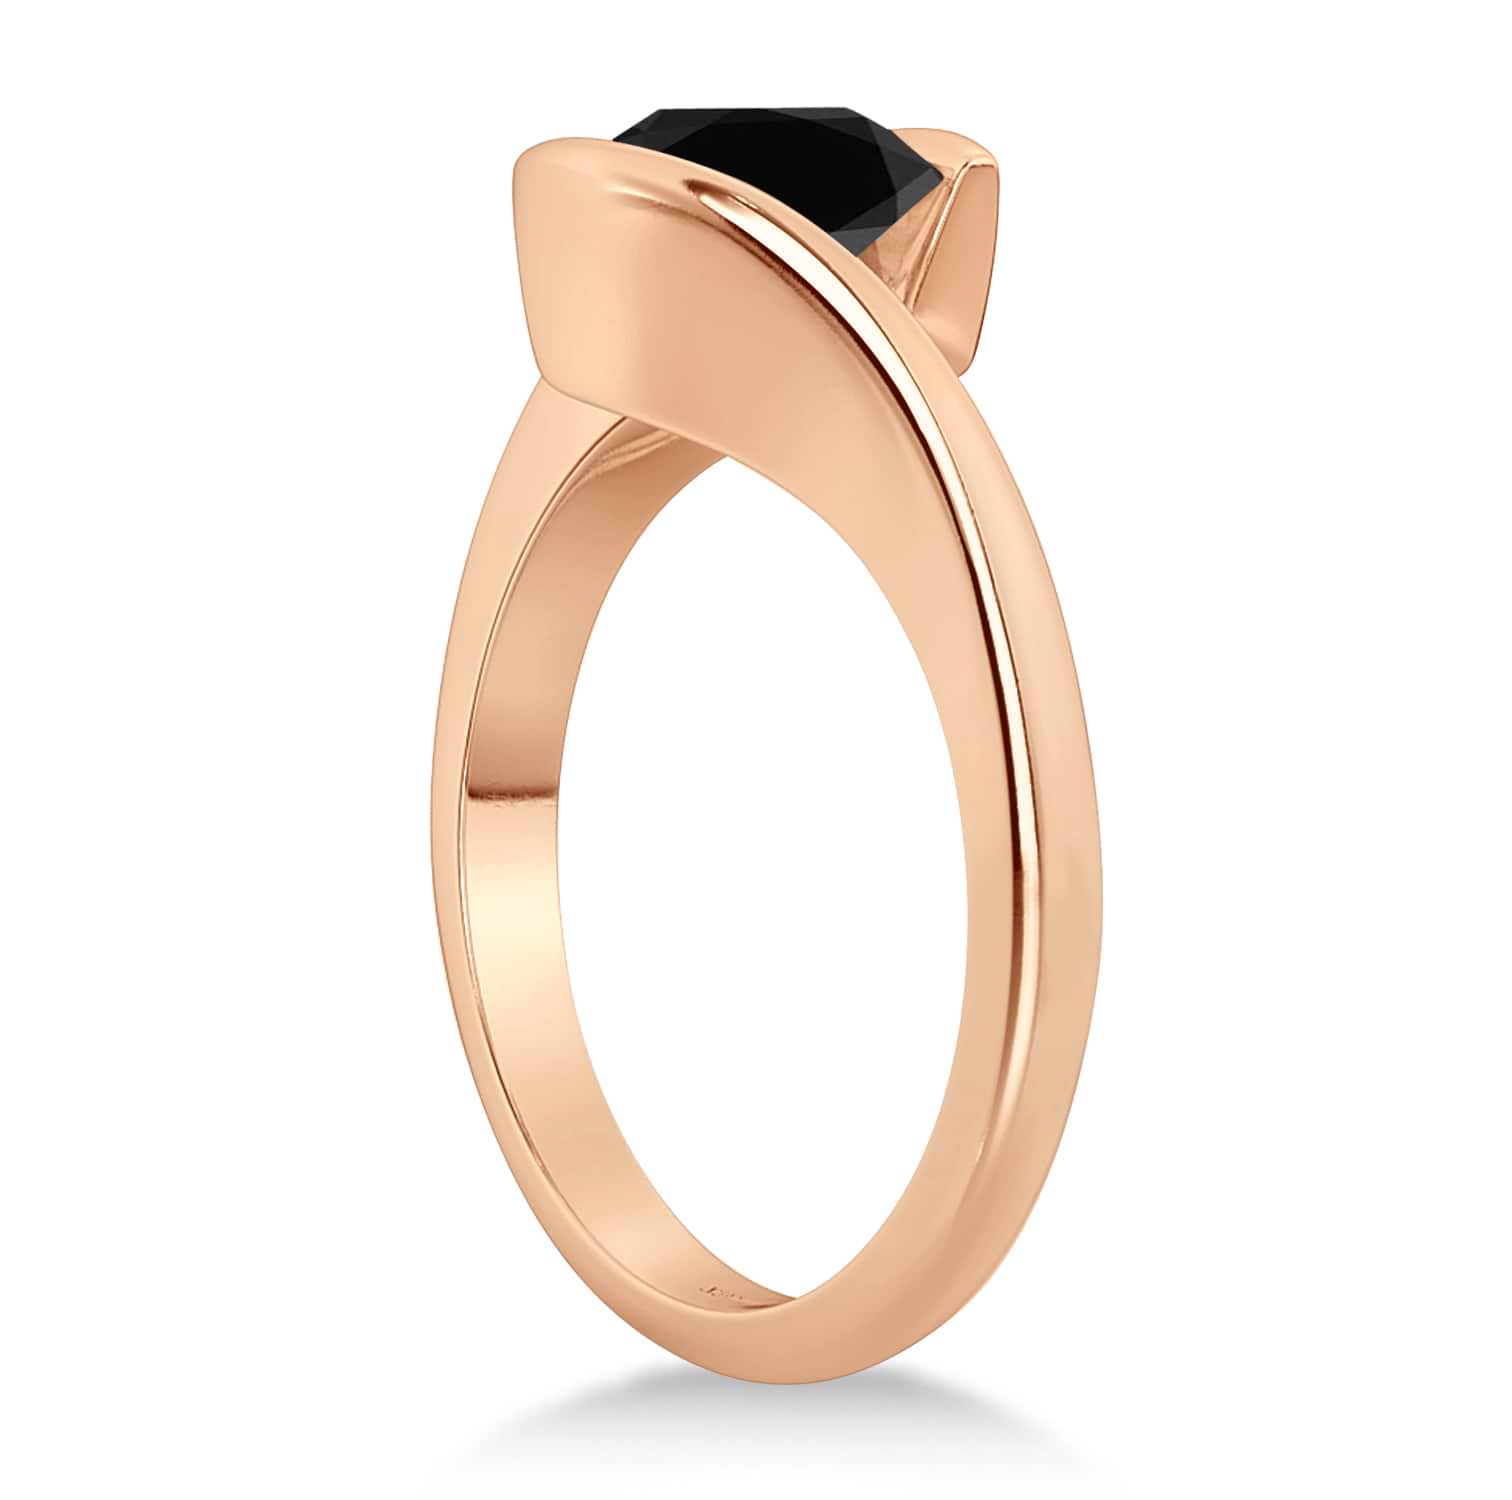 Tension Set Solitaire Black Diamond Engagement Ring 14k Rose Gold 0.50ct